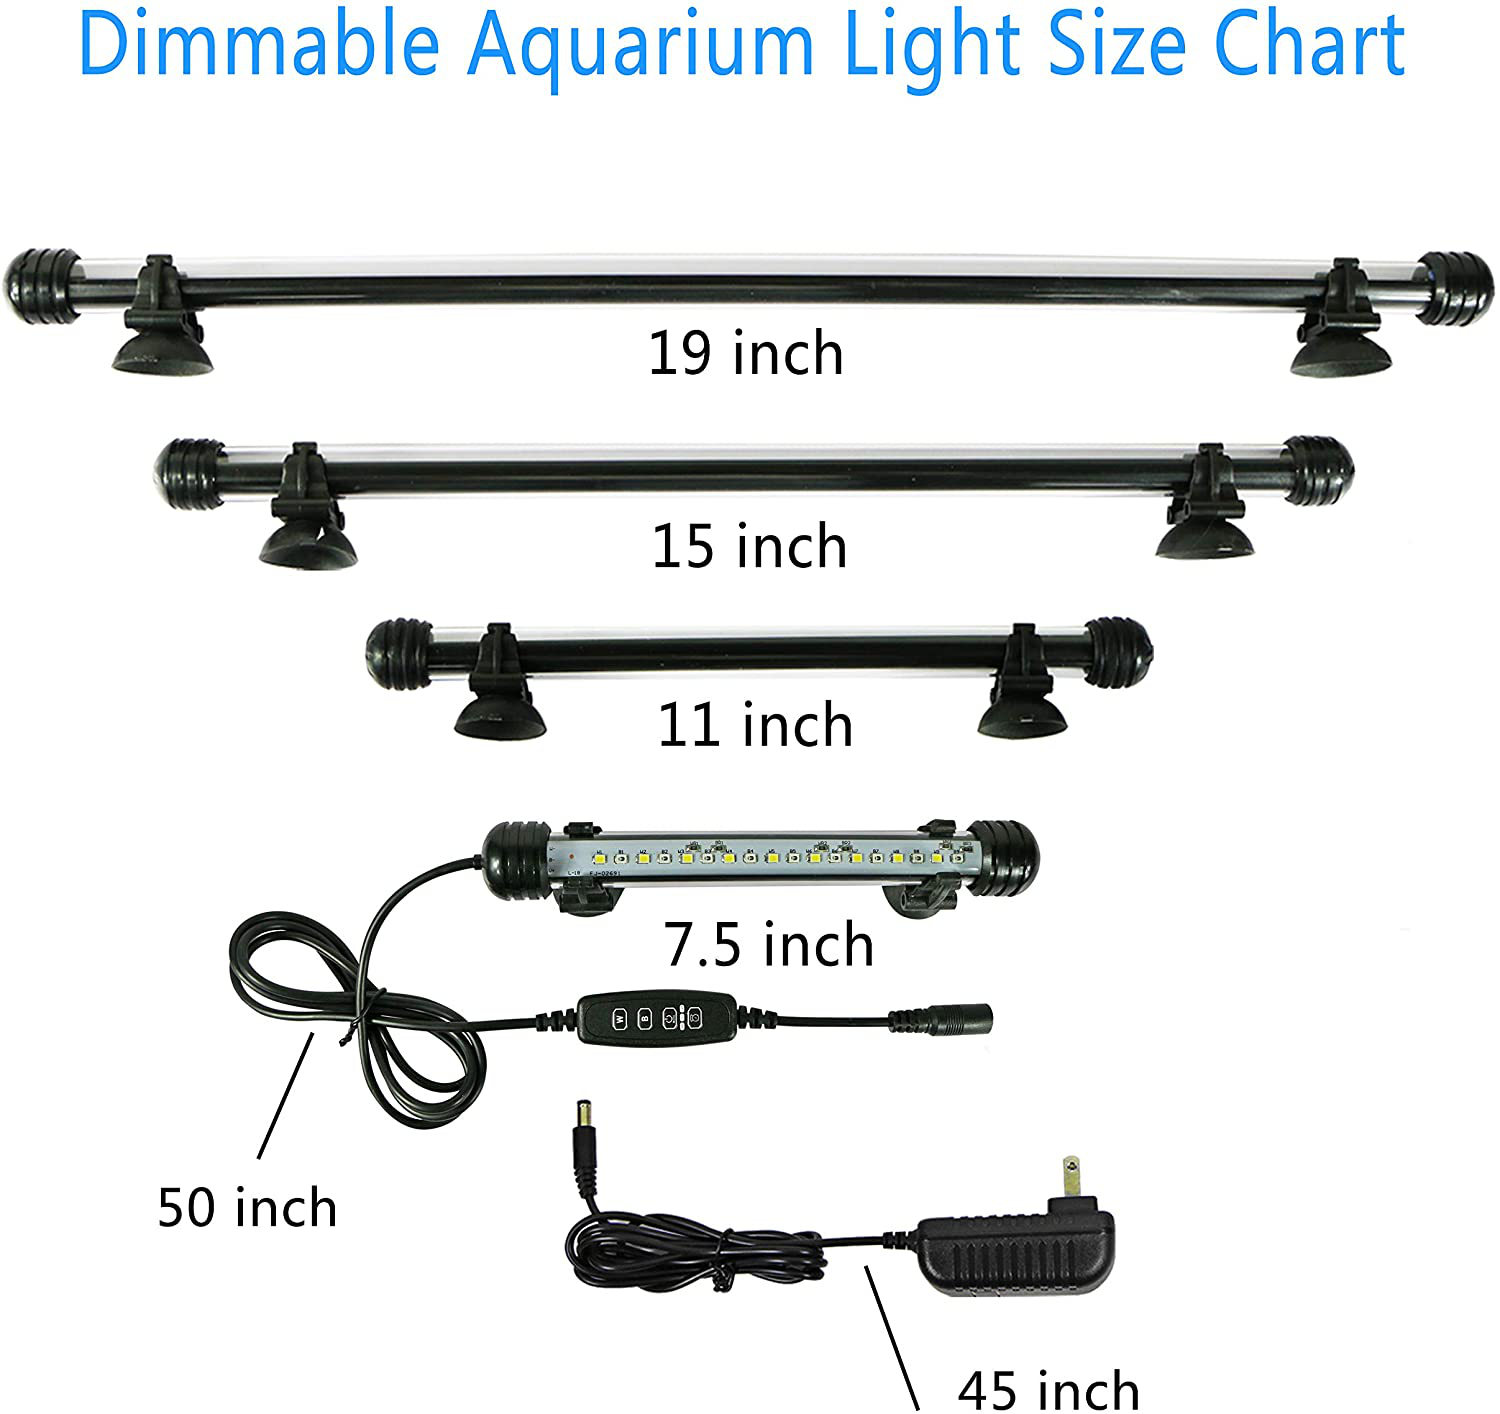 Mingdak Submersible LED Aquarium Light,Fish Tank Light with Timer Auto On/Off, White & Blue LED Light Bar Stick for Fish Tank, 3 Light Modes Dimmable,8W,15 Inch